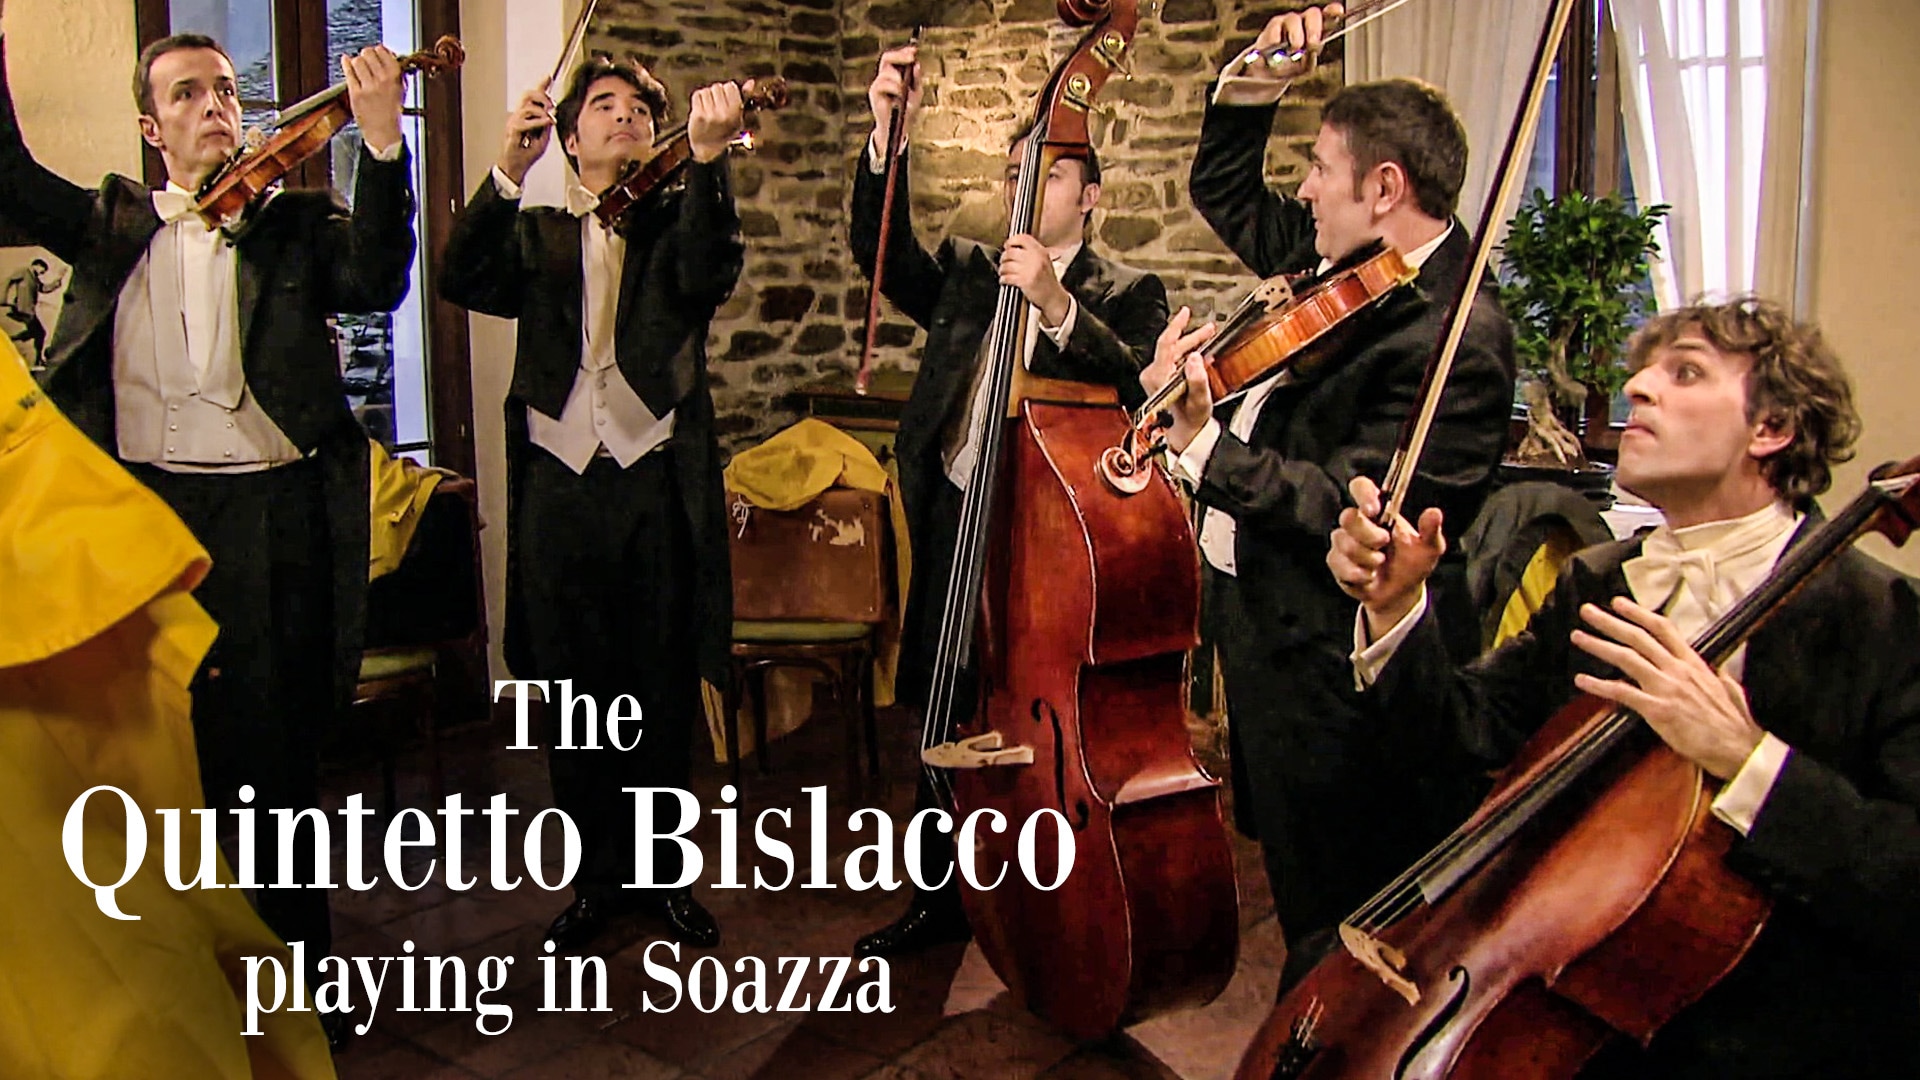 The Quintetto Bislacco playing in Soazza